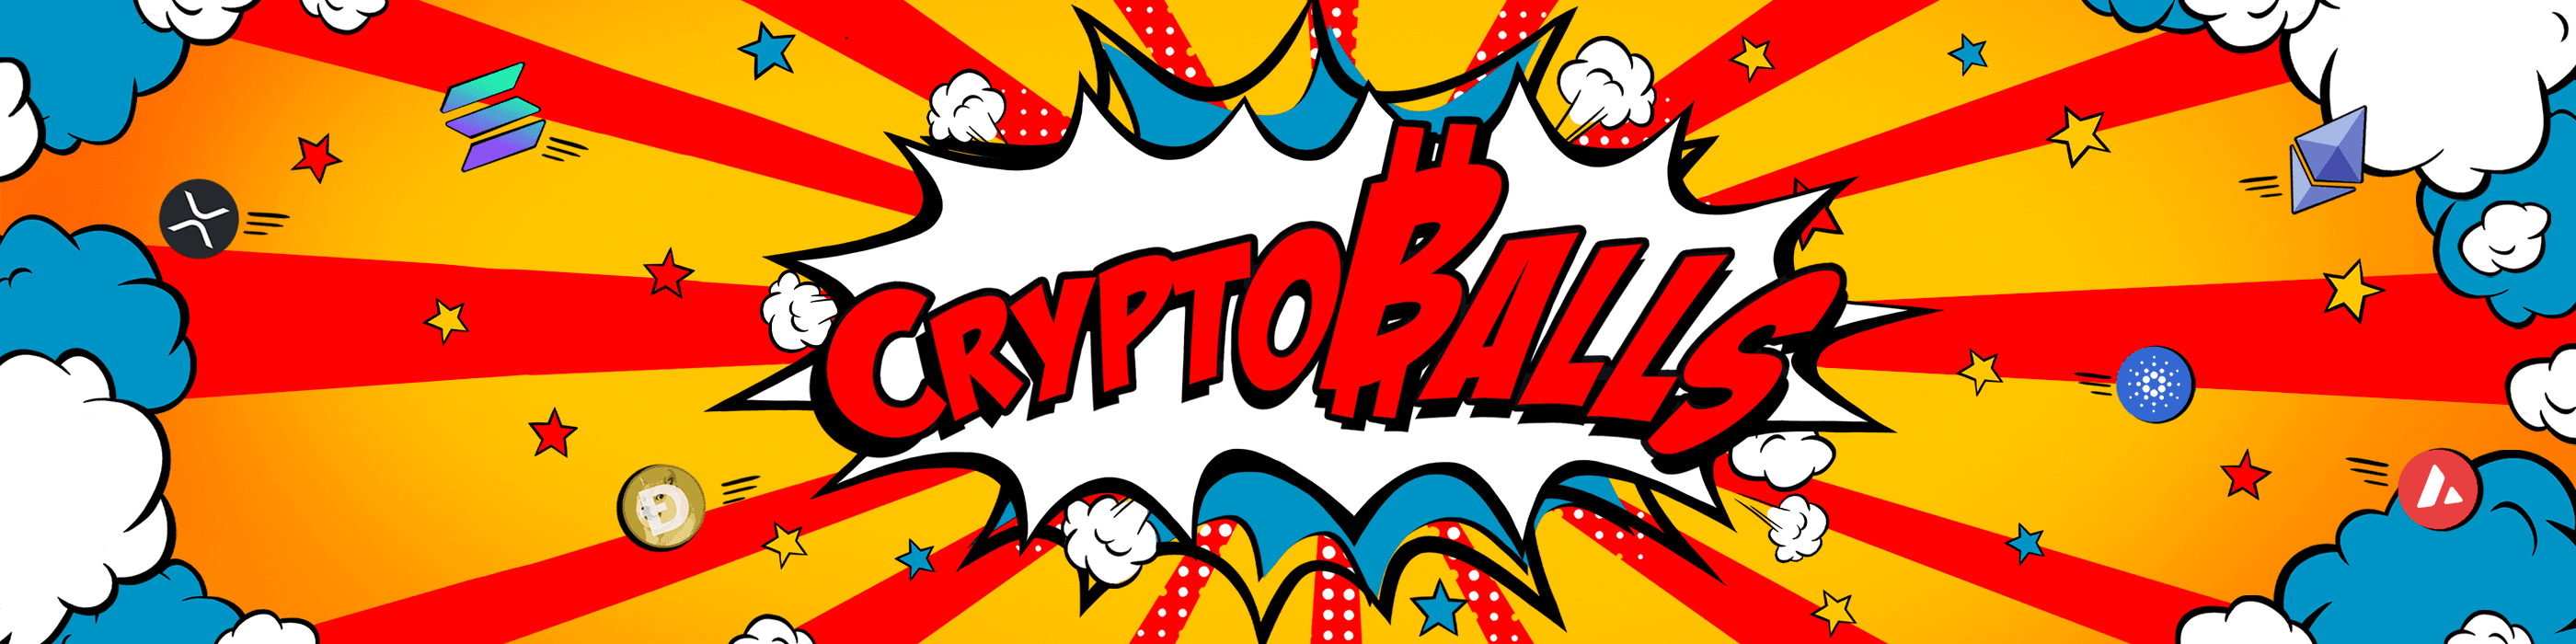 CryptoBalls_xyz banner